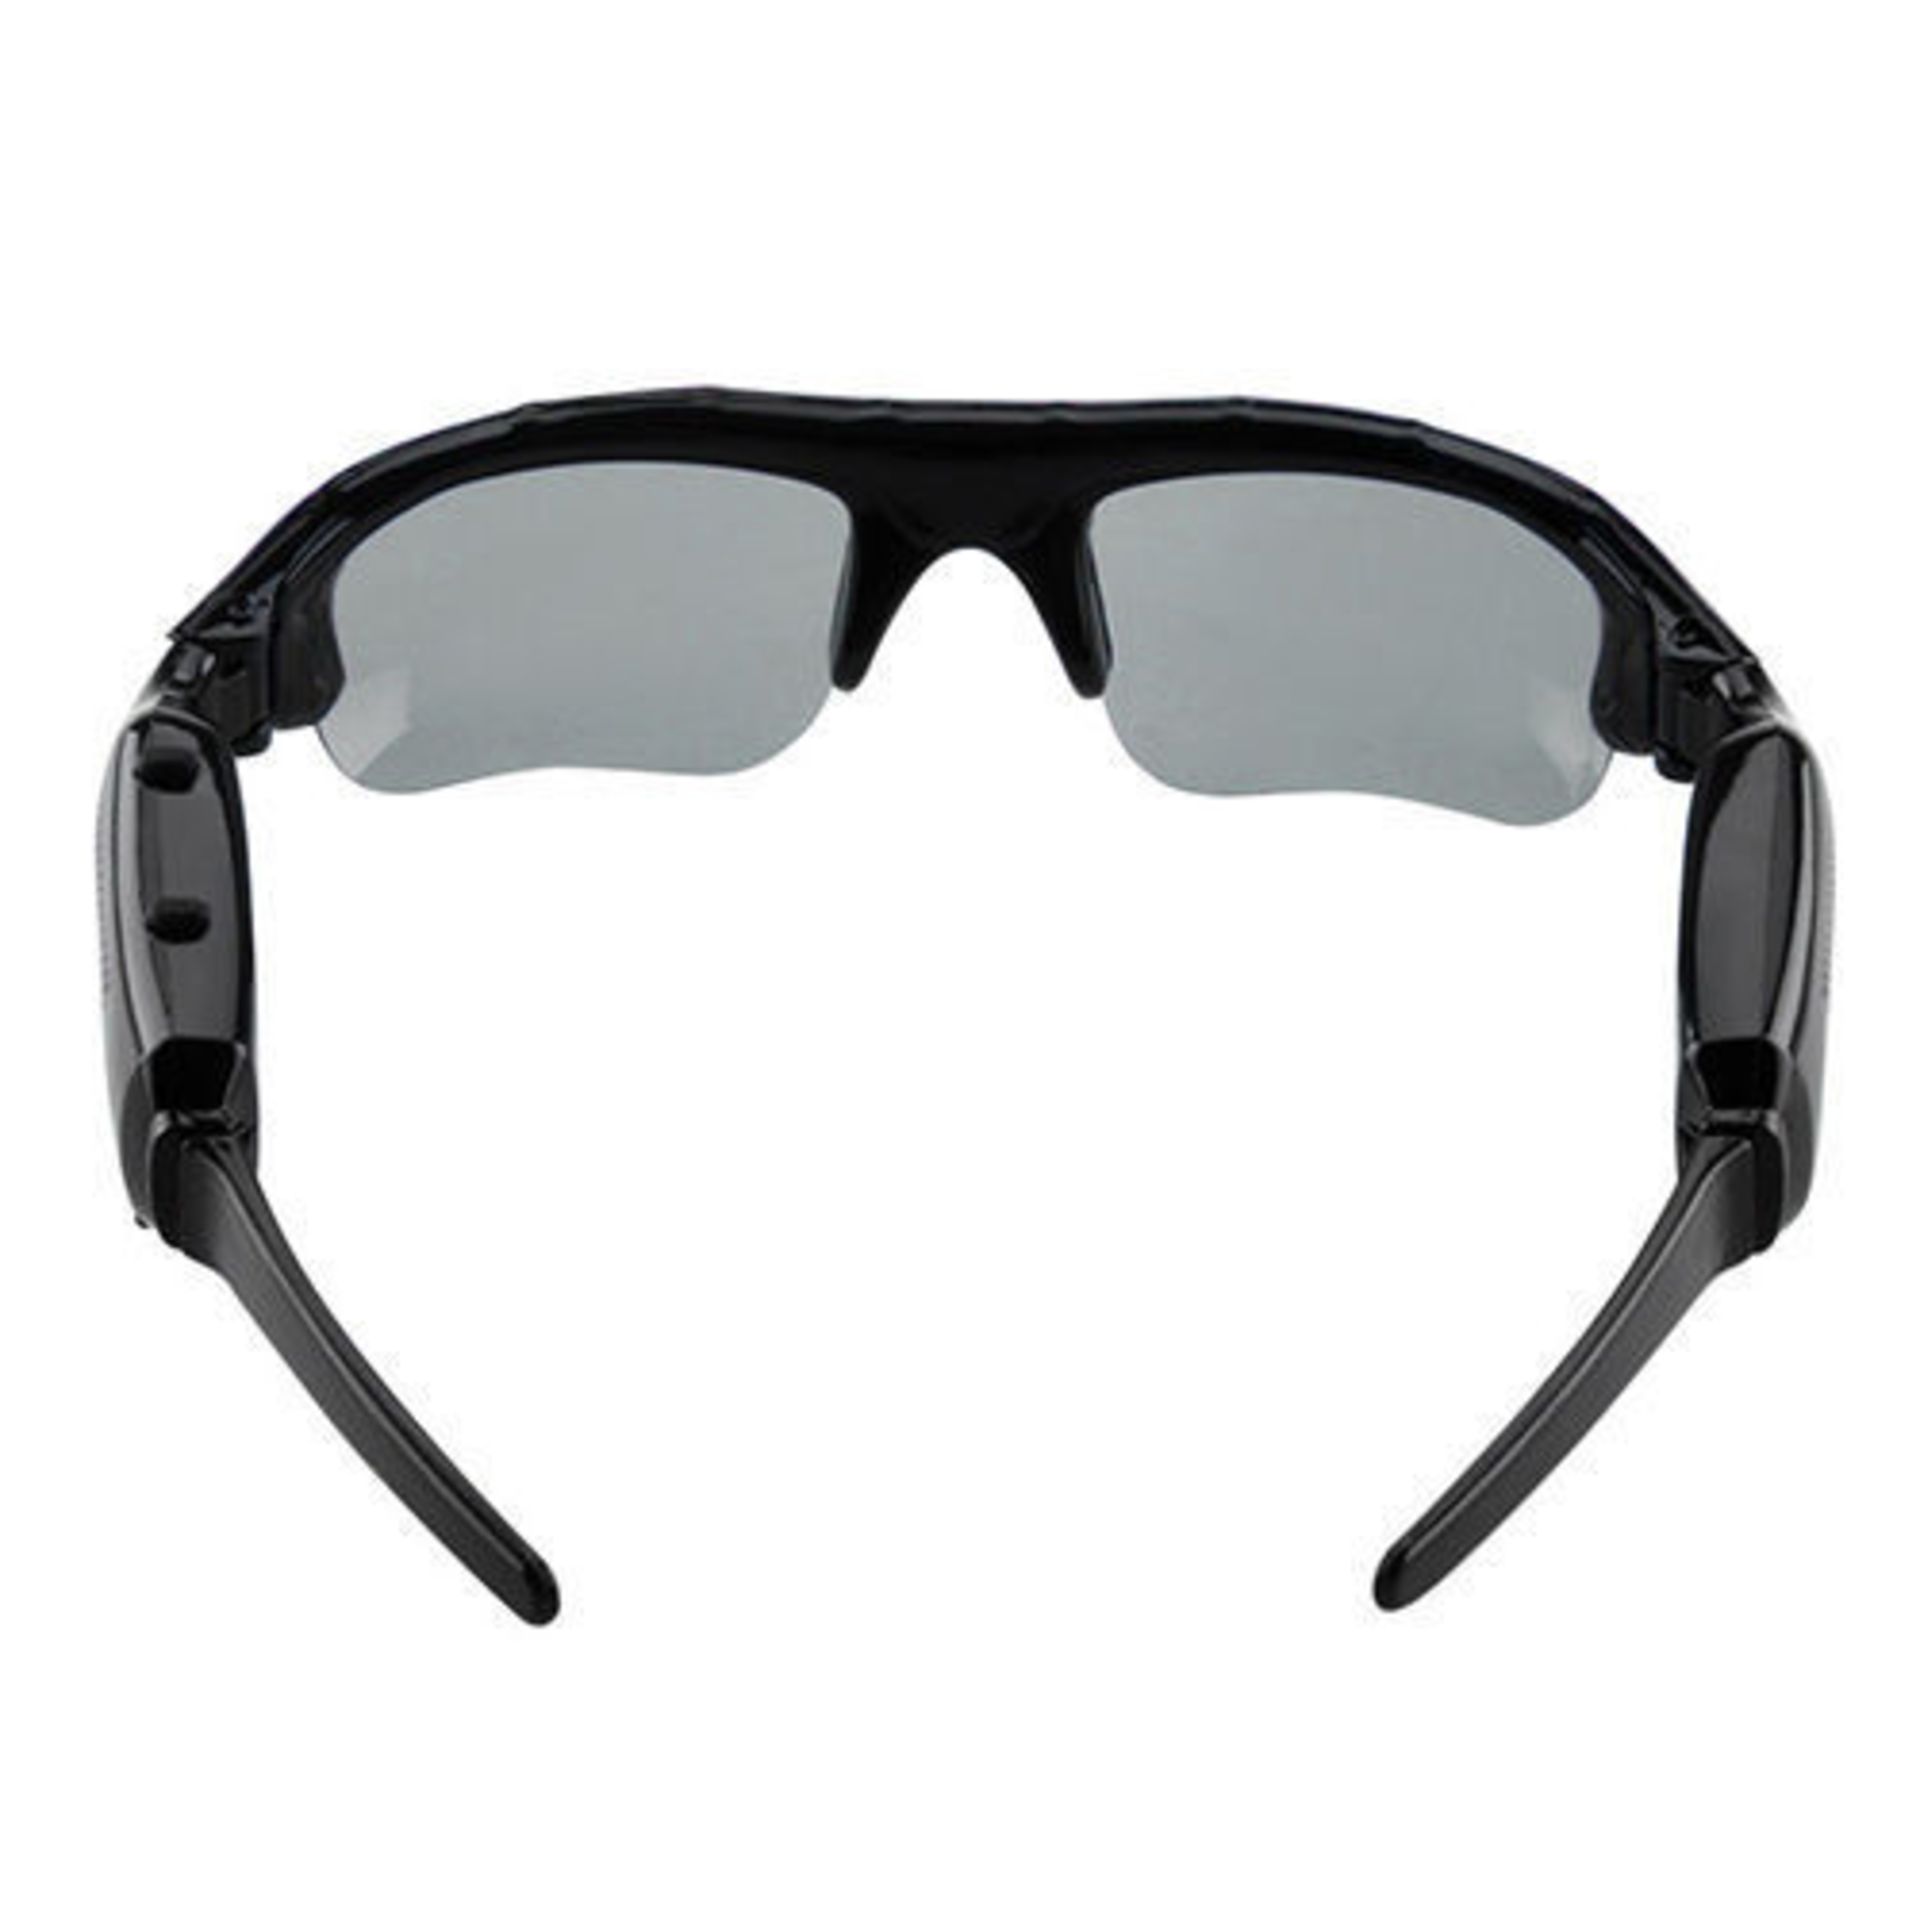 + VAT Brand New Adventure Pro HD Video & Sound Recording Sunglasses Action Cam ISP £29.99 (Ebay) - Image 4 of 4